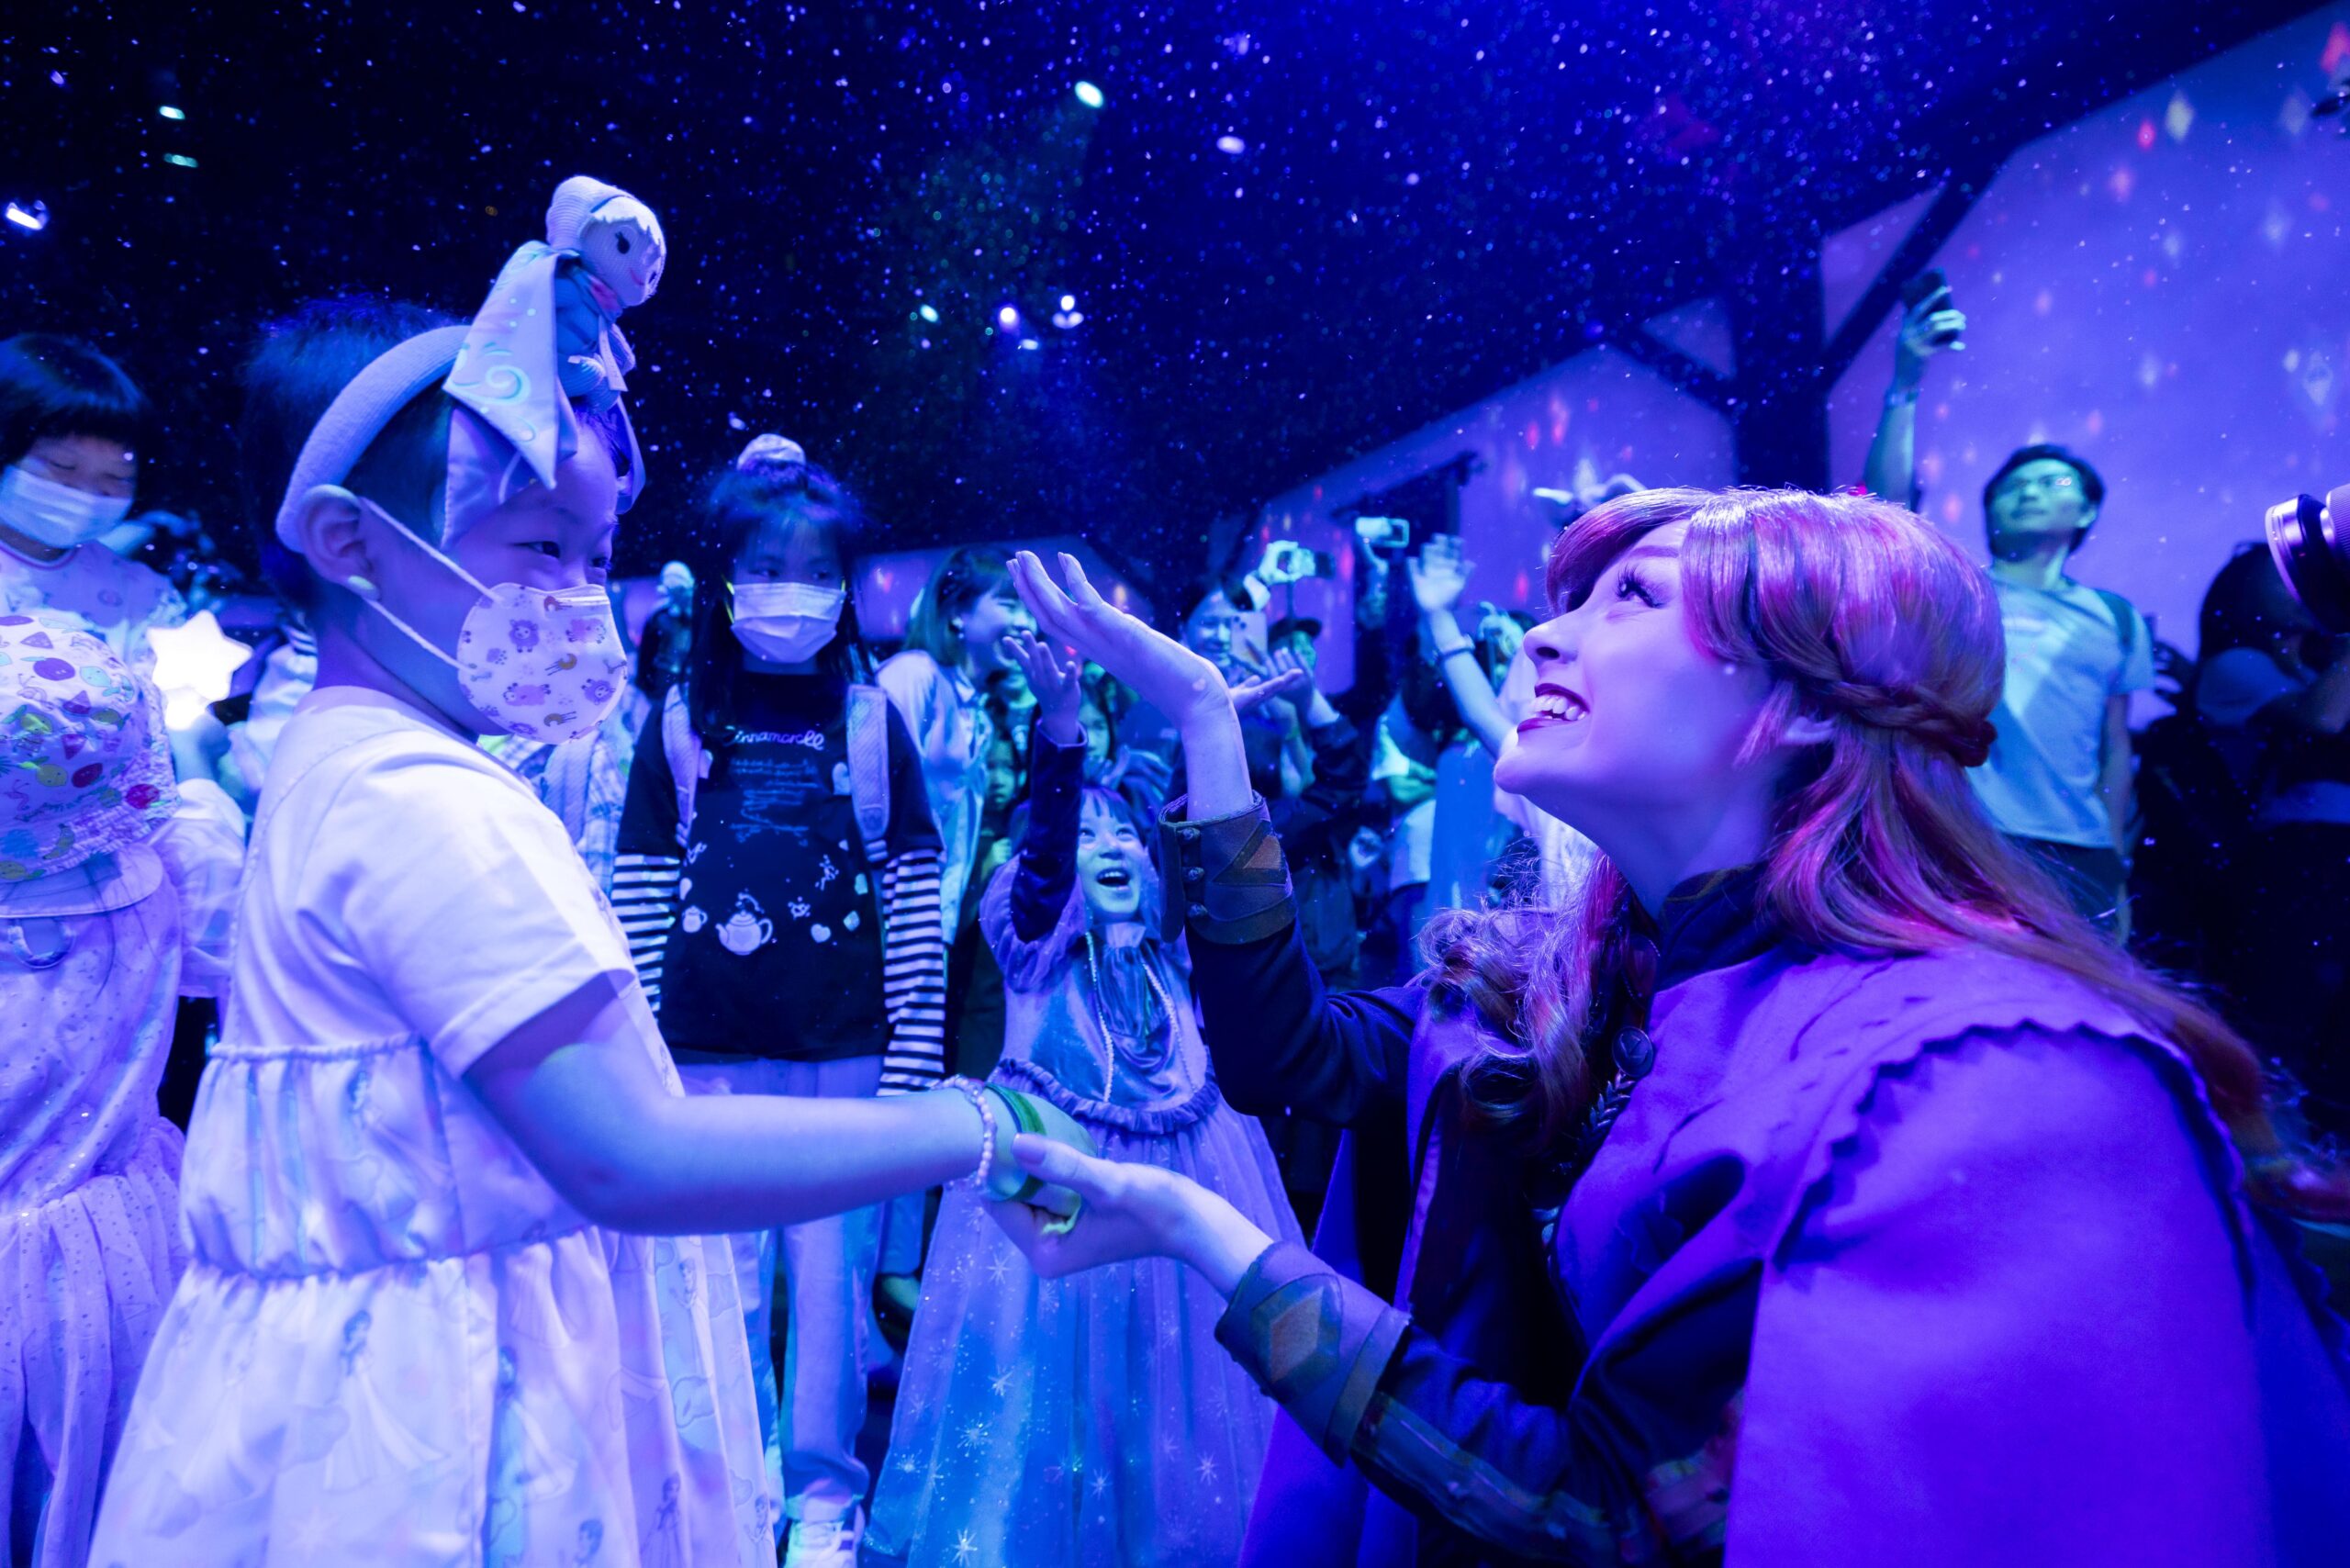 Hong Kong Disneyland teams up with Make-A-Wish, treats critically ill kids to ‘Summer Snow Day’at new World of Frozen